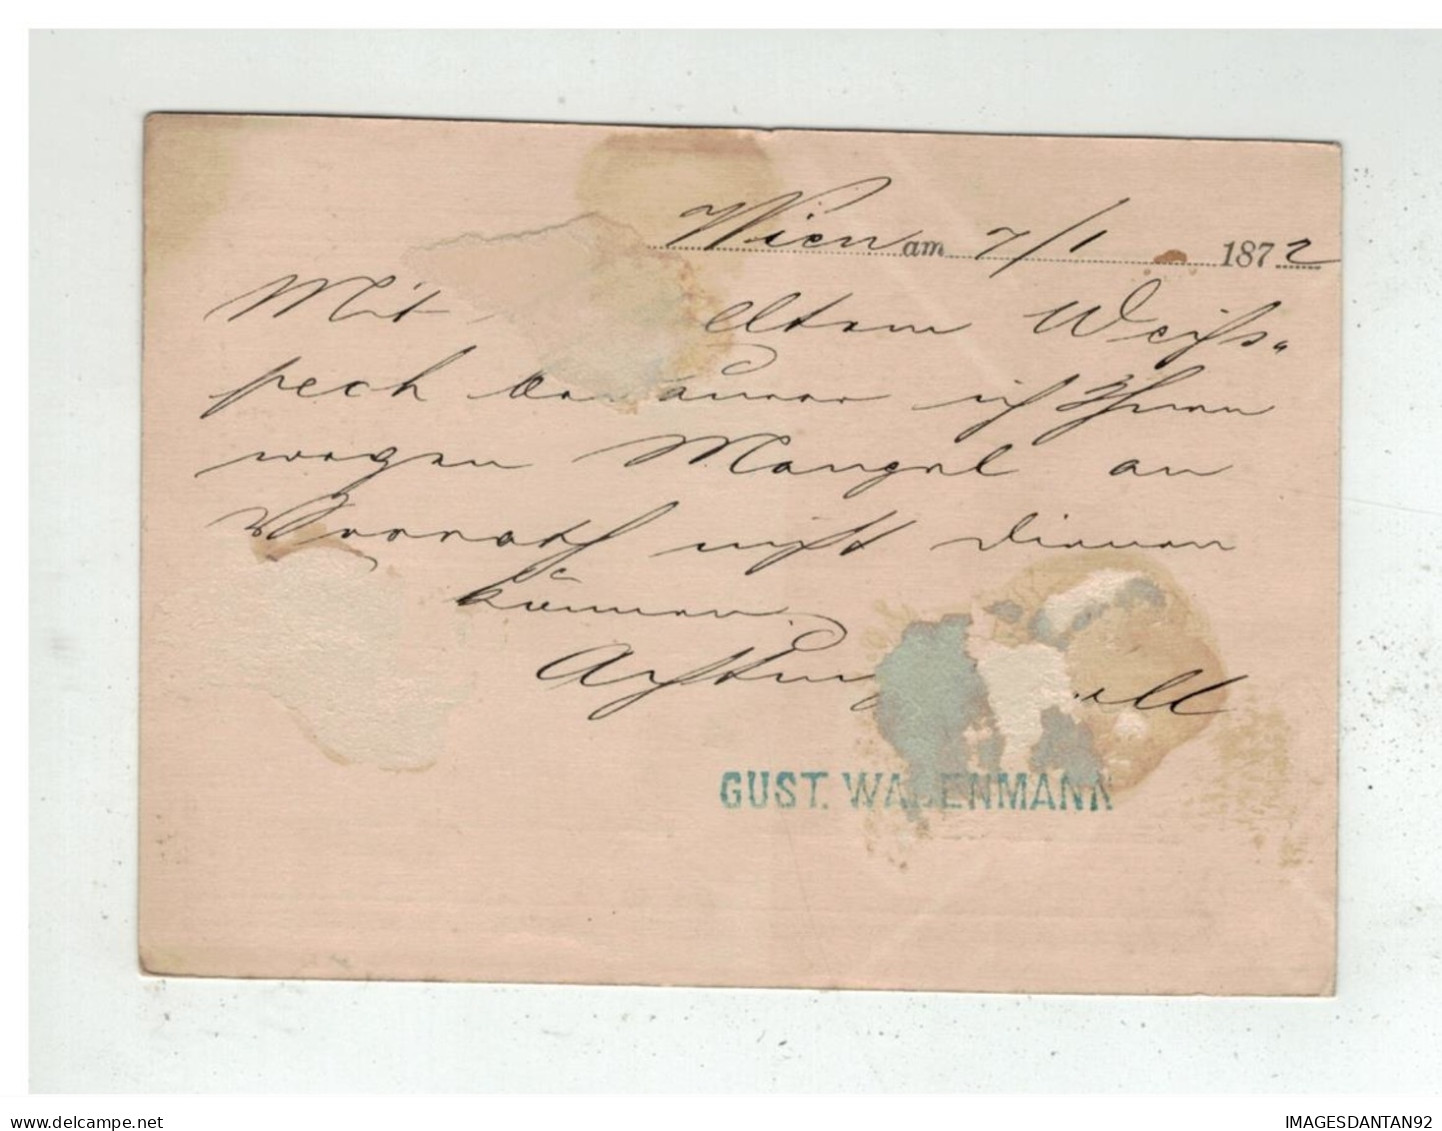 Autriche - Entier Postal 2 Kreuser De WIEN à Destination De KARLSTADT KARLOVAC CROATIA 1872 - Postal Stationery